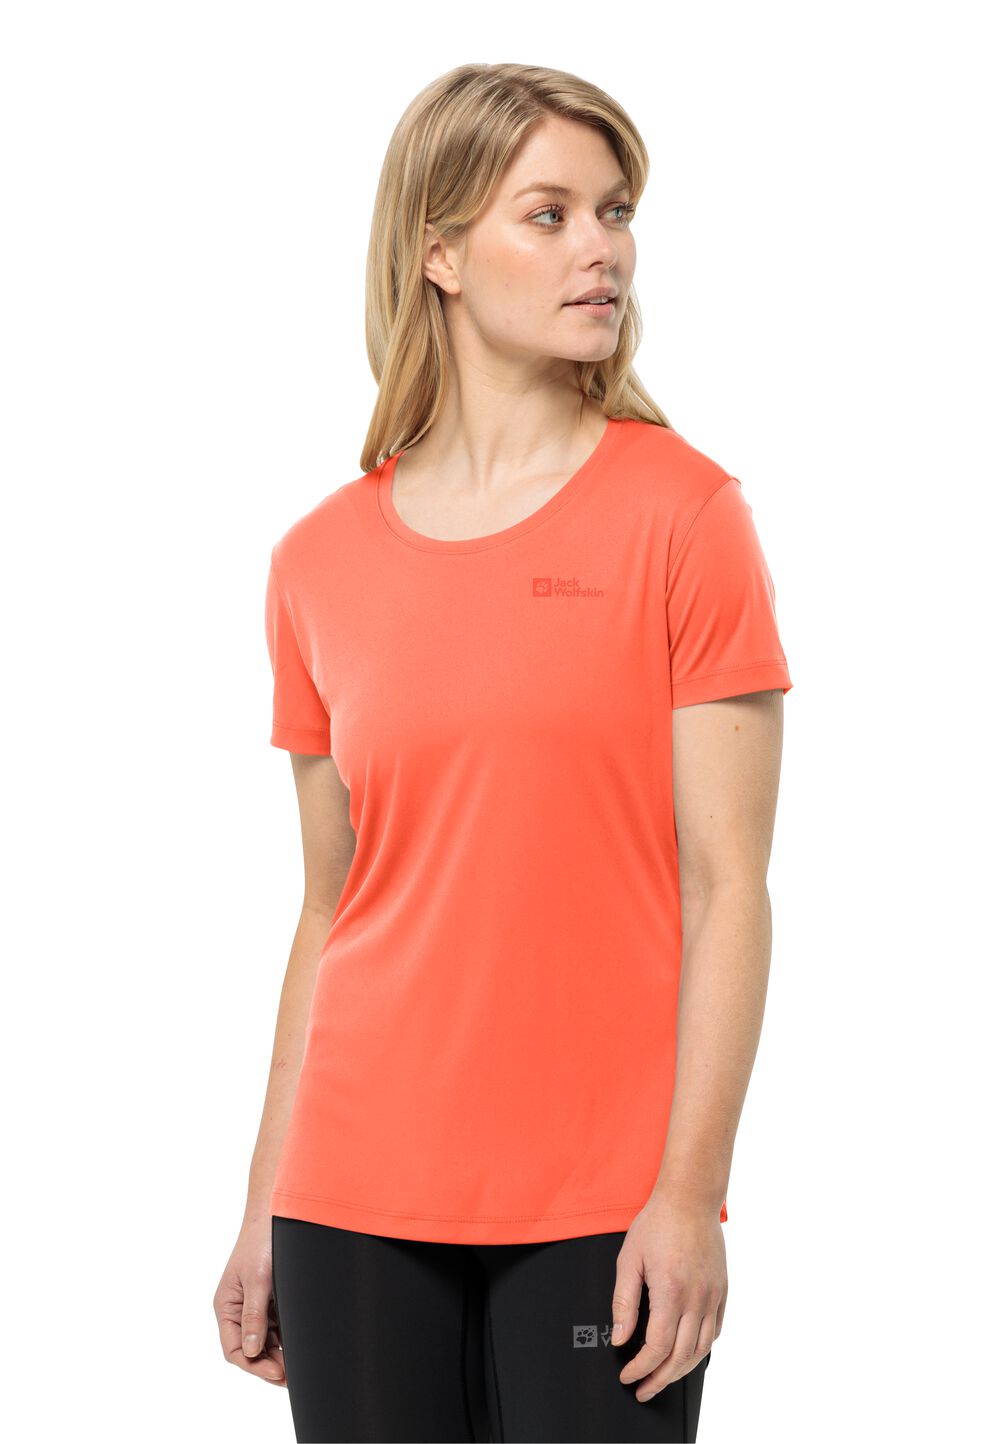 Jack Wolfskin Tech T-Shirt Women Functioneel shirt Dames XL rood digital orange